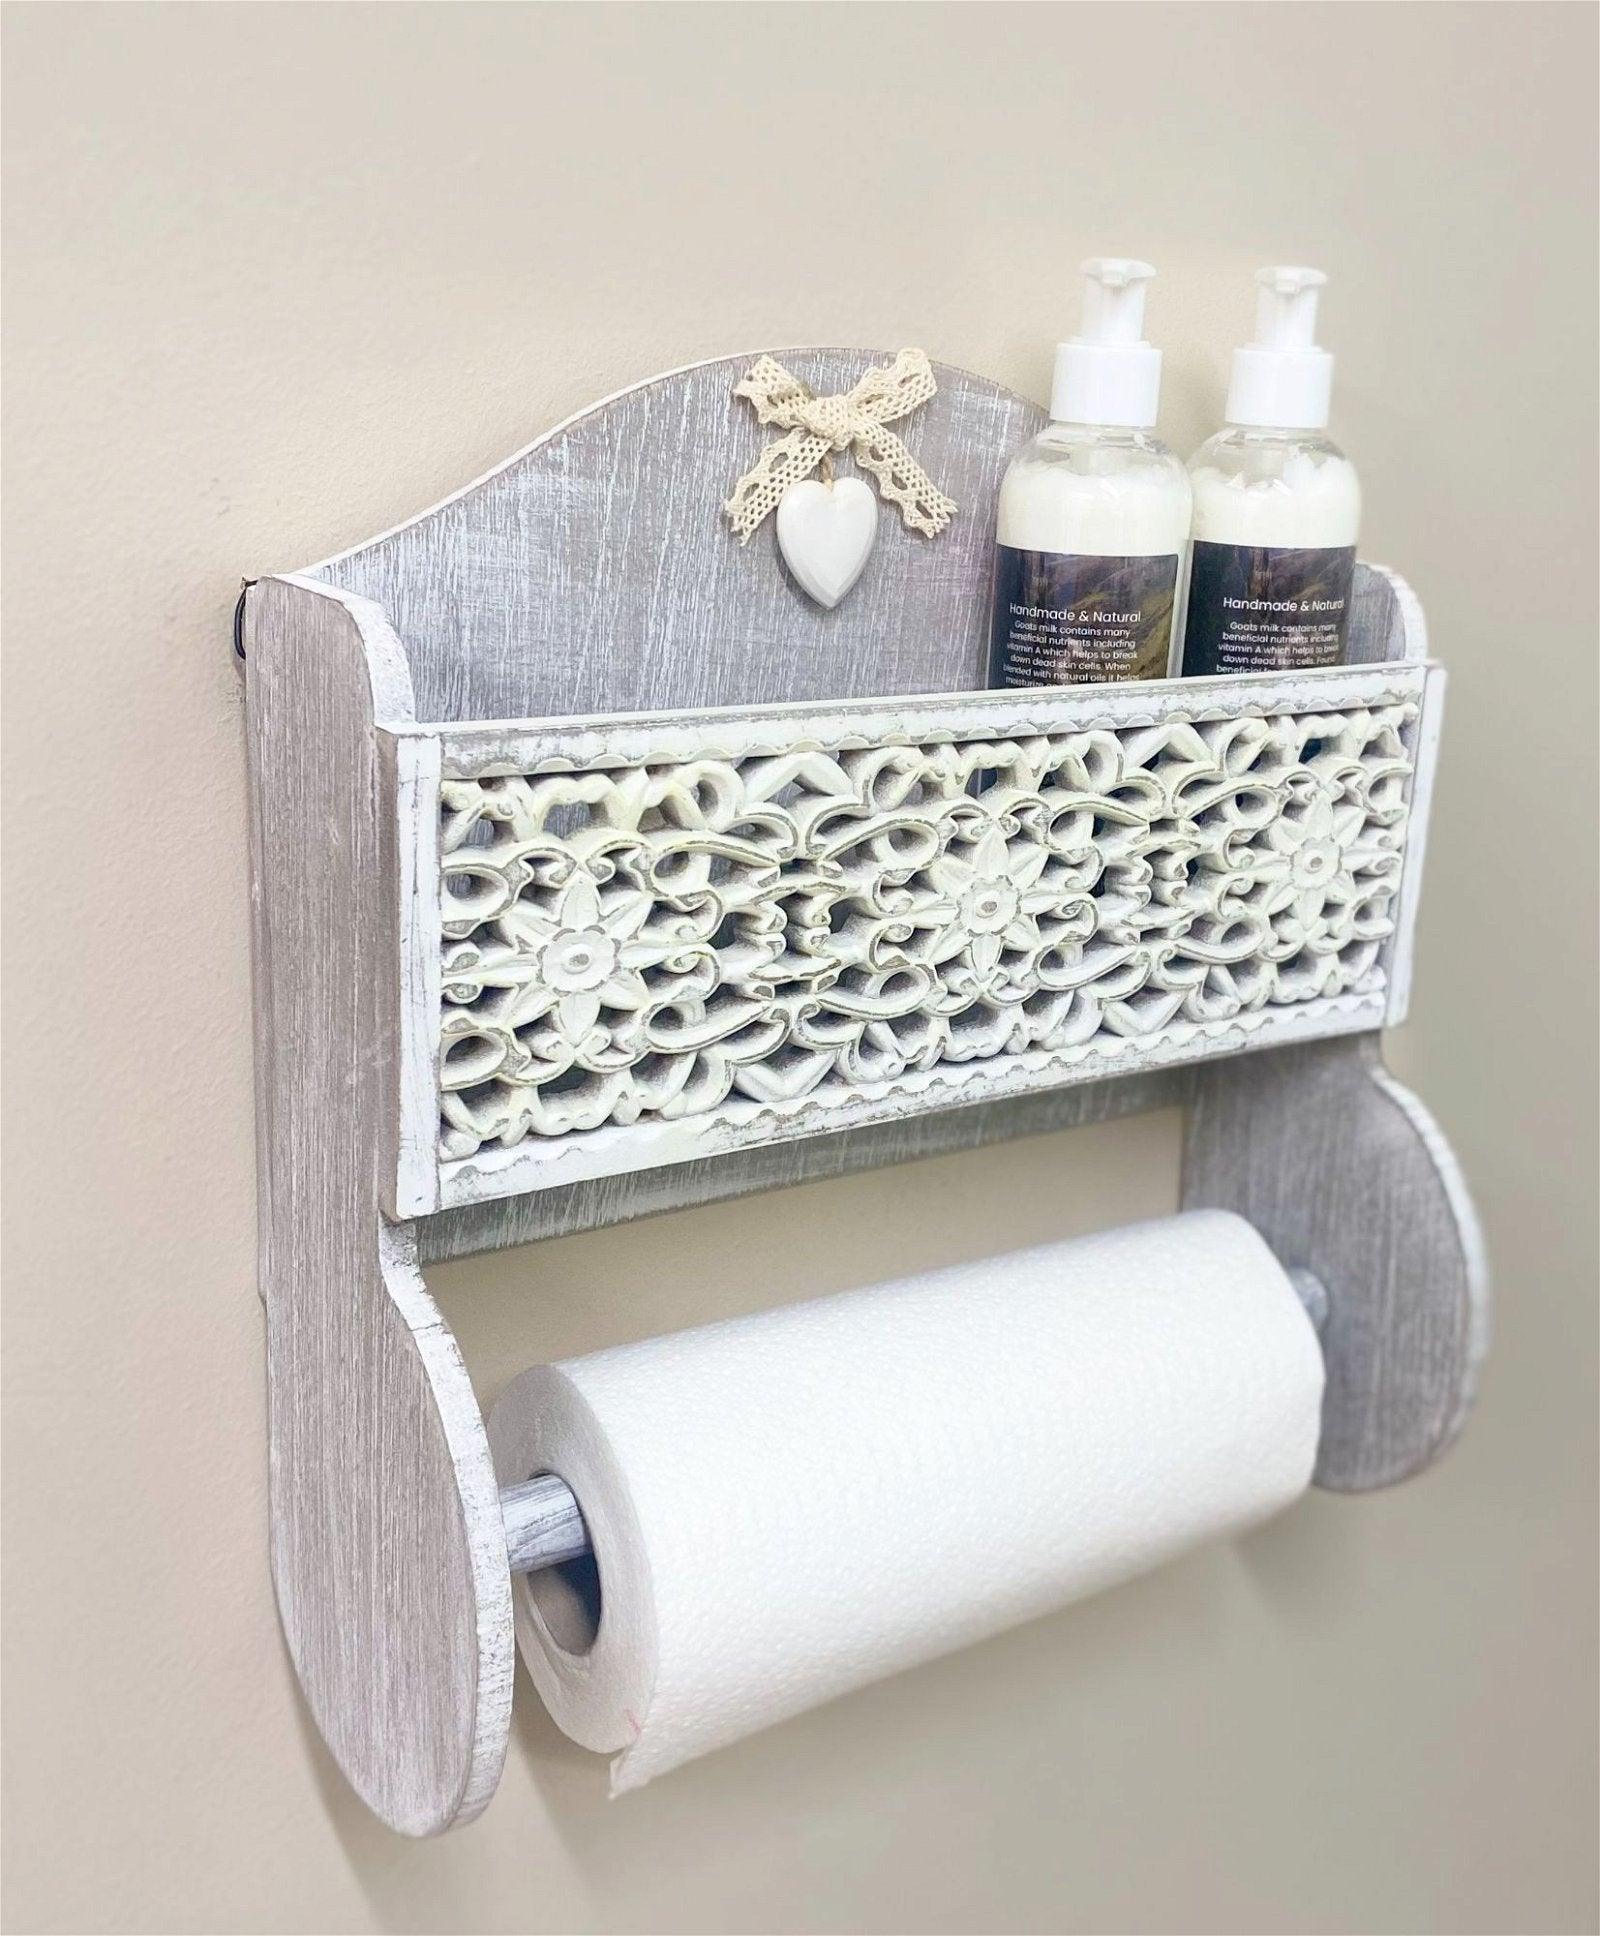 View Grey Wooden Kitchen Towel Holder With Cutout Pattern Shelf information